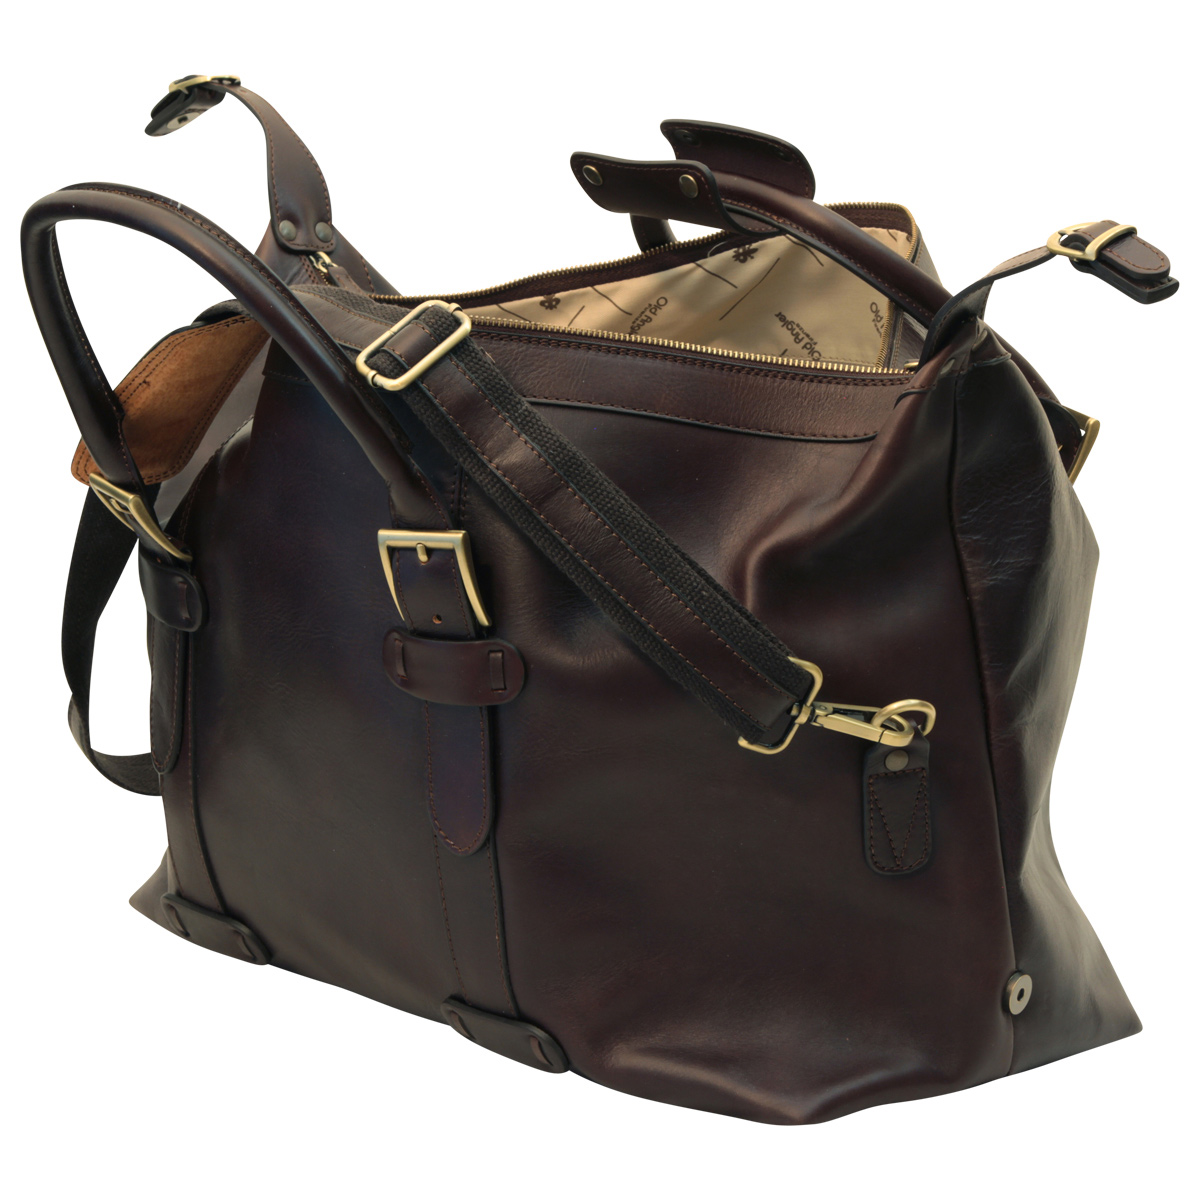 Cowhide leather Travel Bag - Dark Brown | 410689TM US | Old Angler Firenze